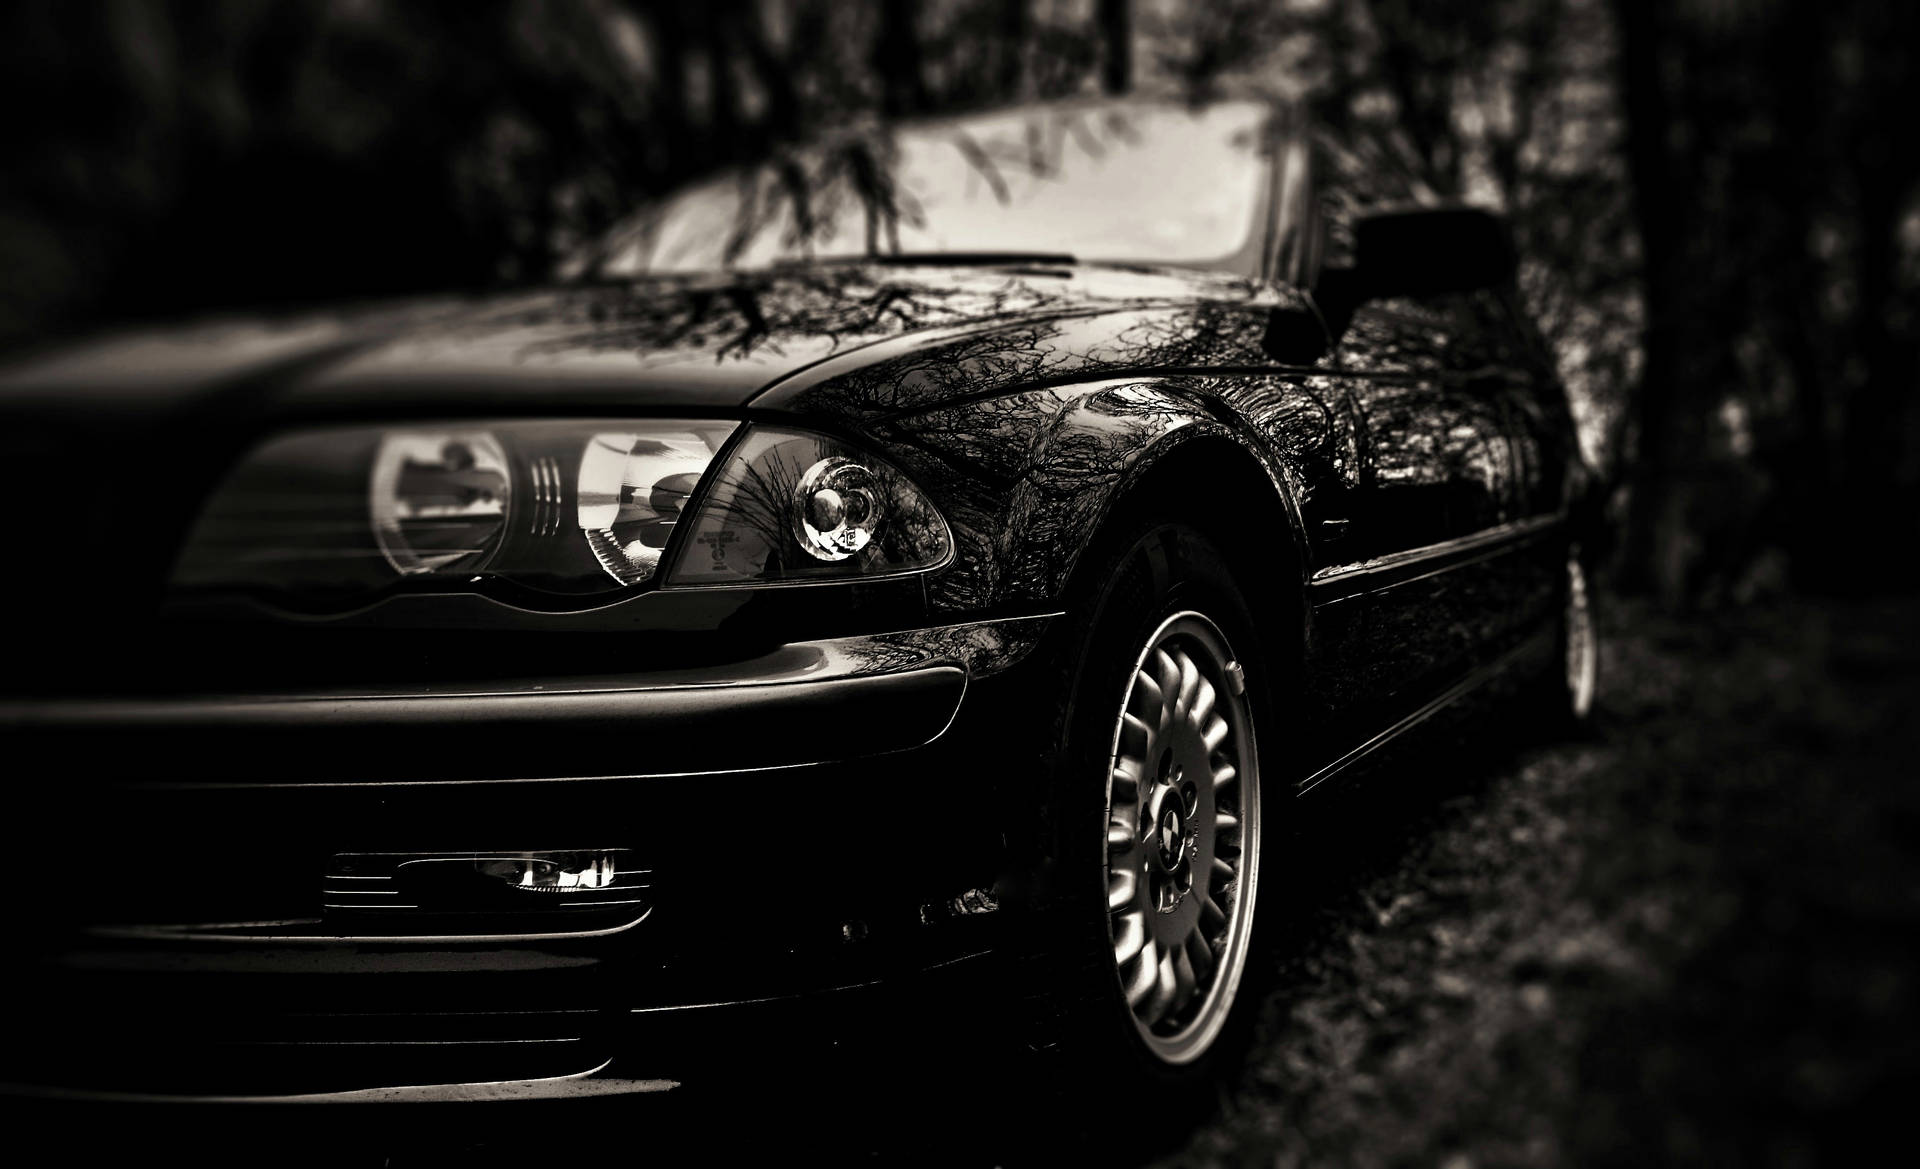 A Reflecive Brand-new Black Car Background